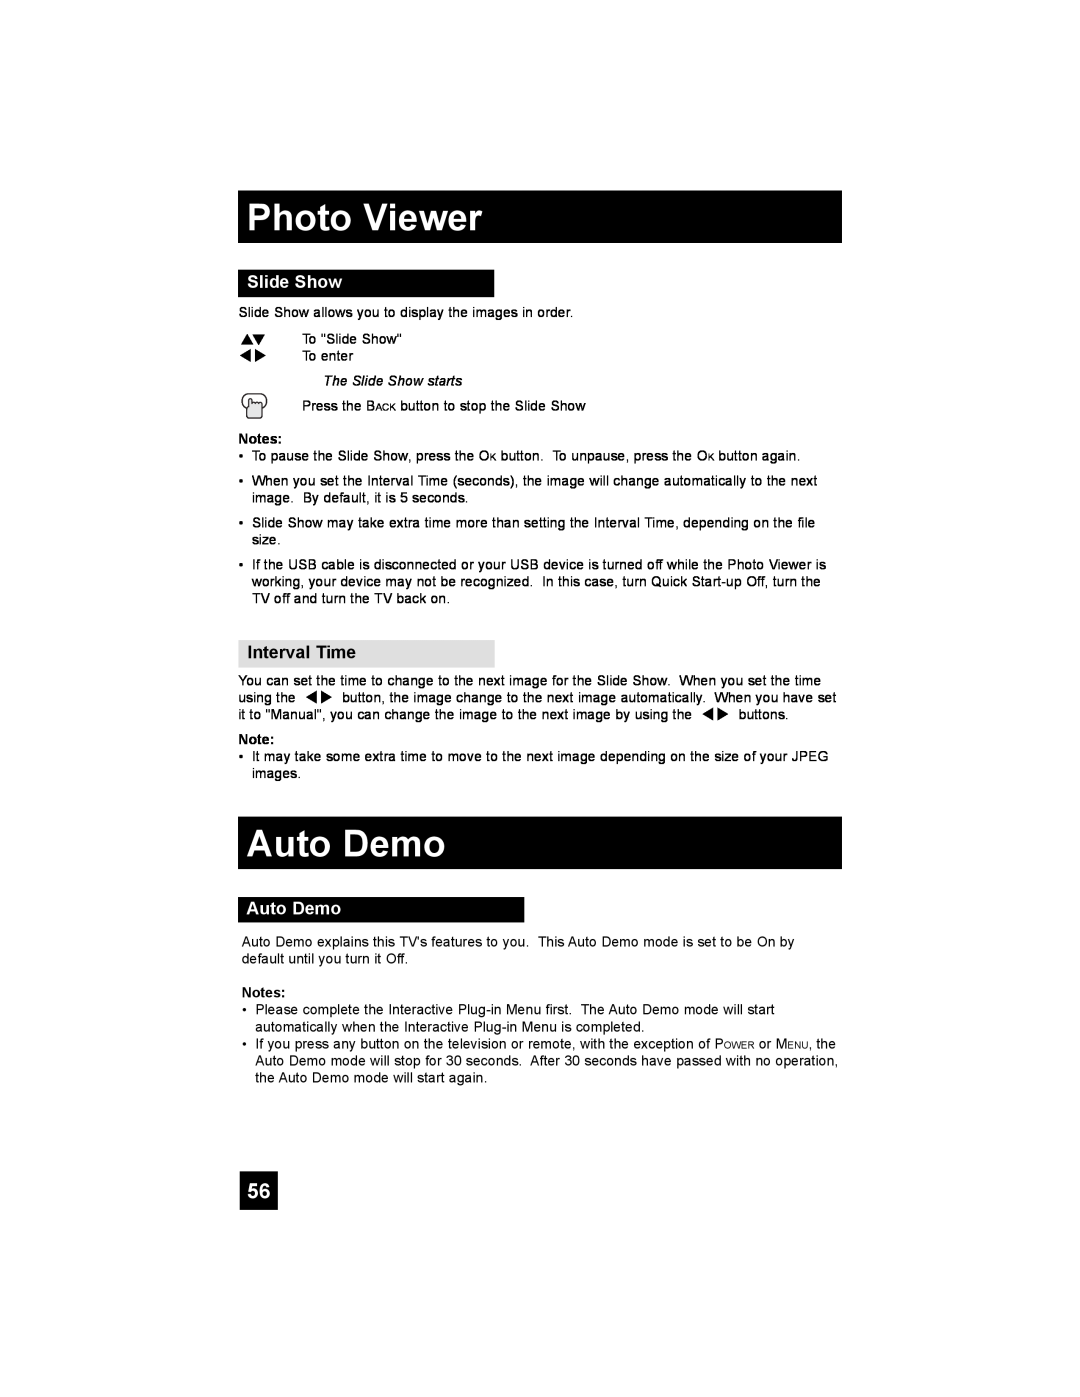 JVC LT-42X688, LT-37X688 manual Auto Demo, Slide Show, Interval Time, Photo Viewer 